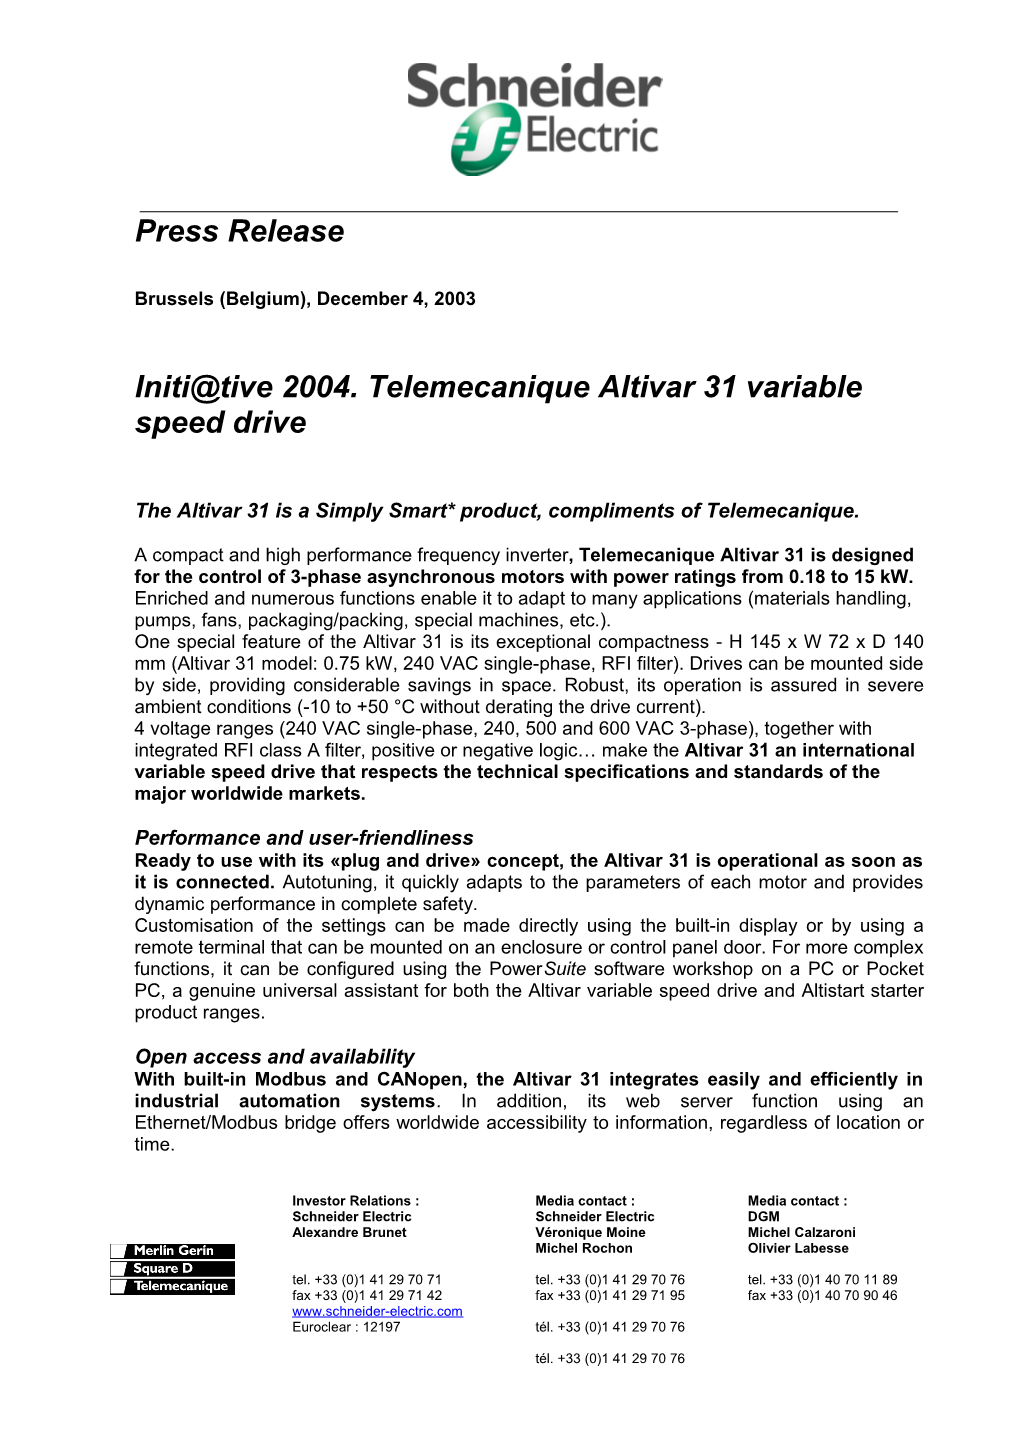 Initi Tive 2004. Telemecanique Altivar 31 Variable Speed Drive